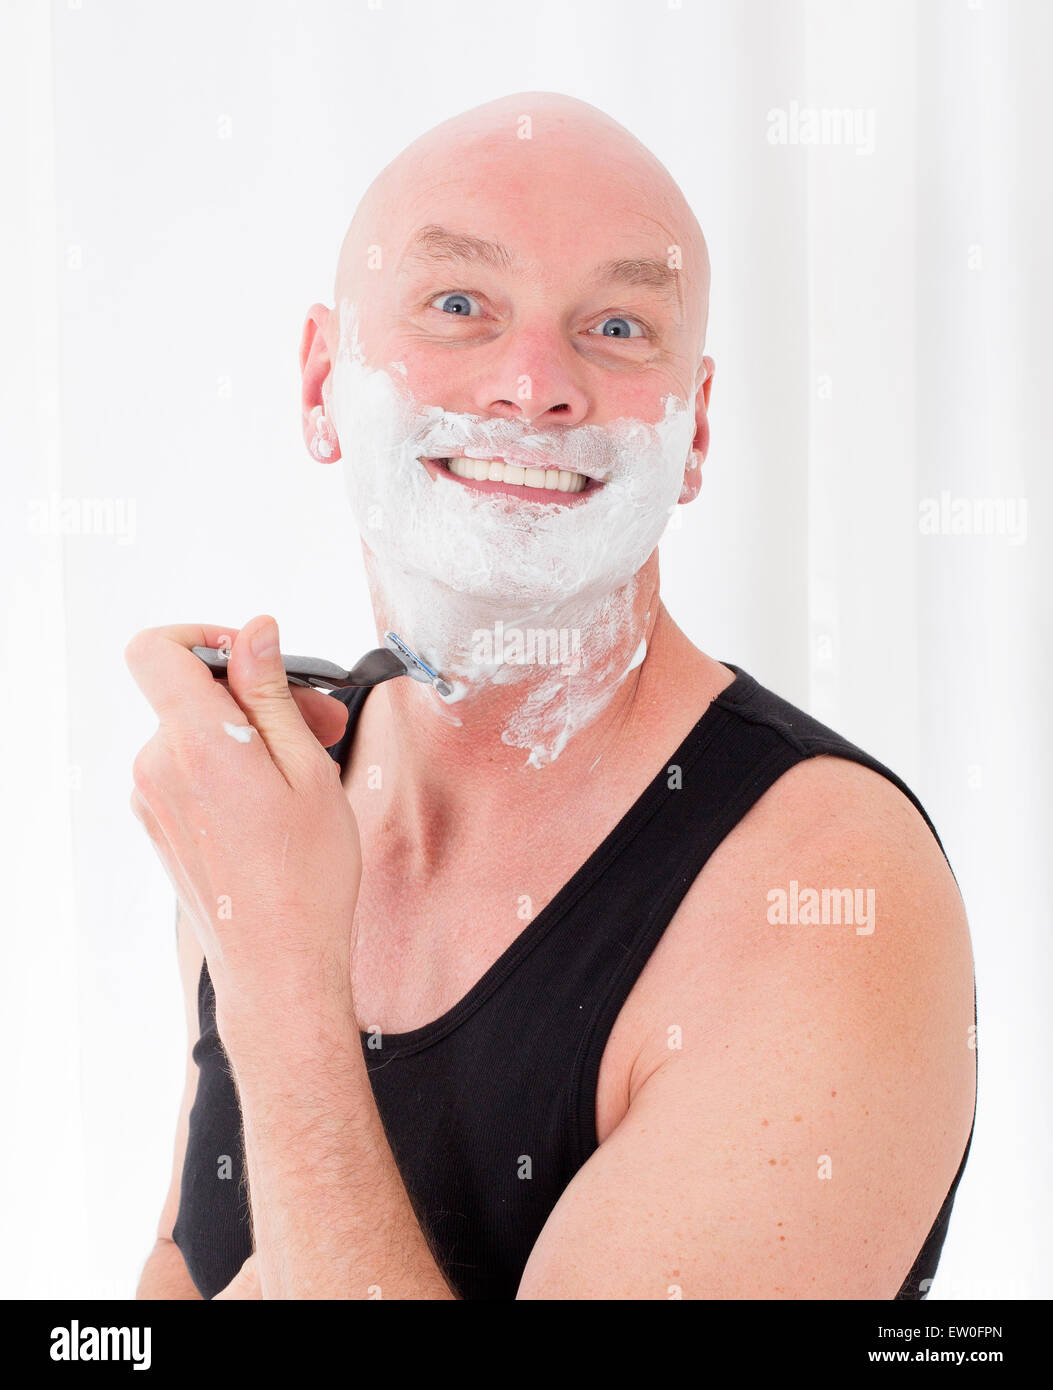 bald-headed man shaving and smiling Stock Photo